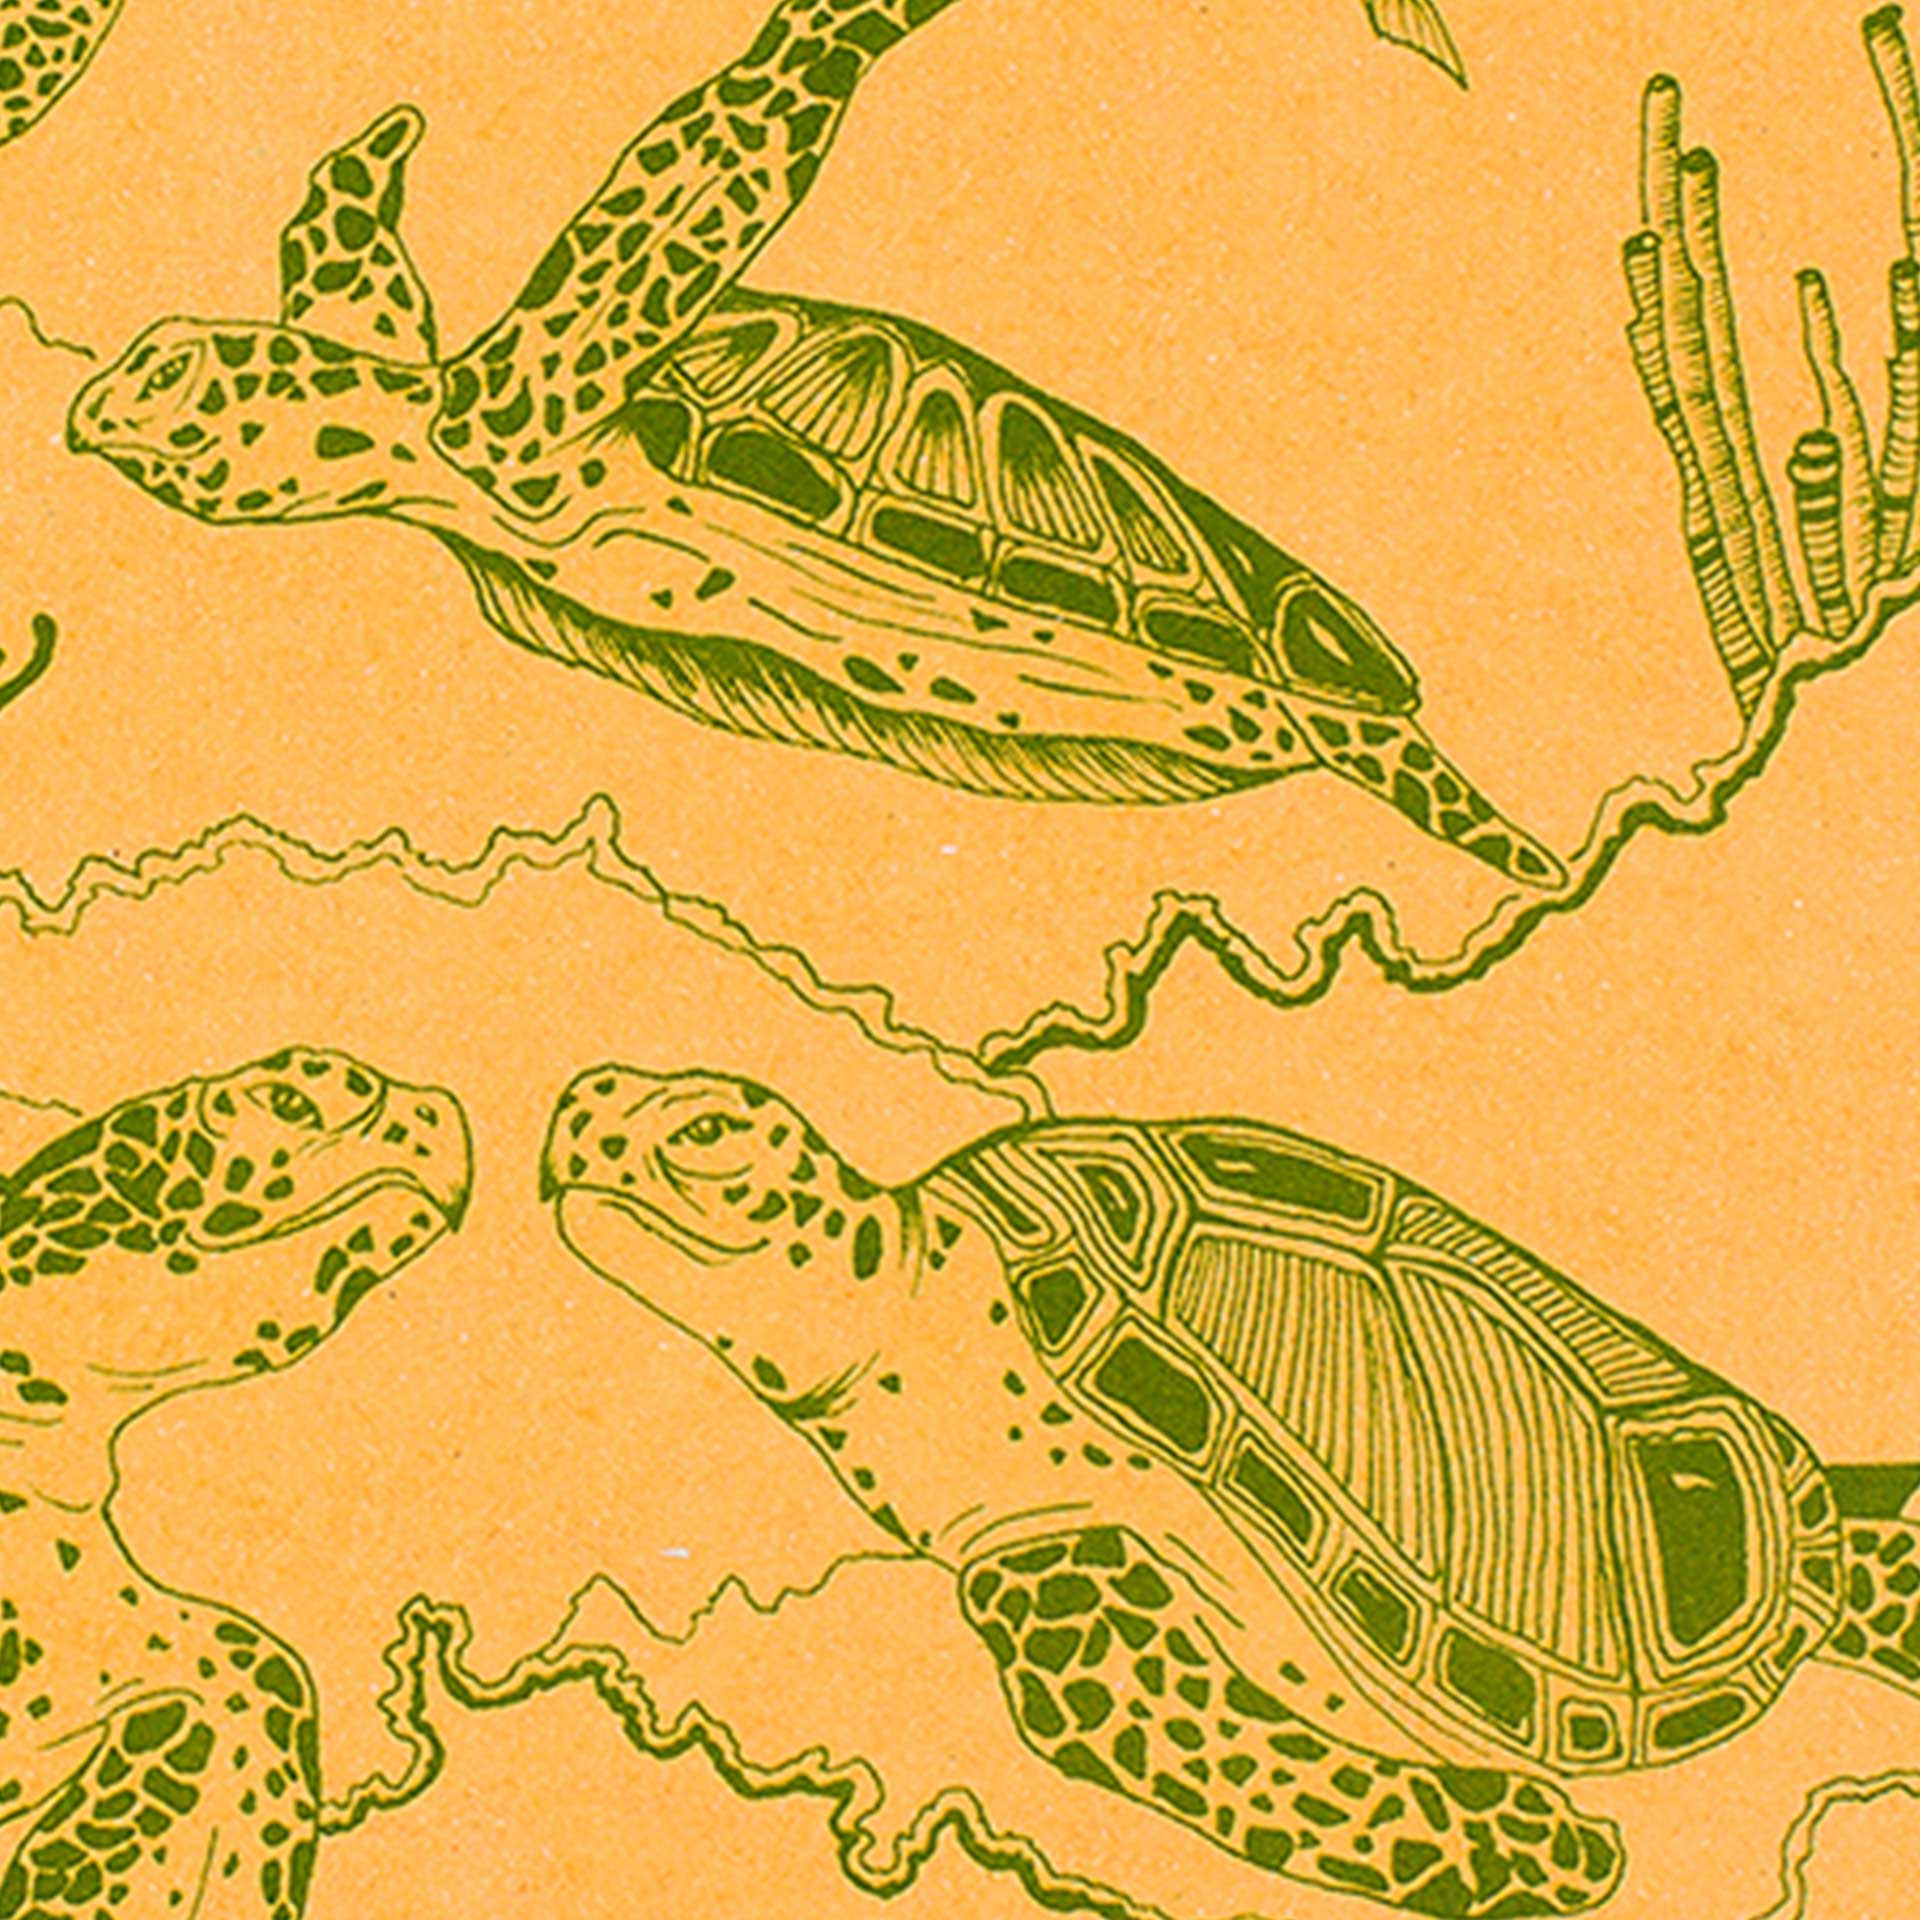 Closeup green turtles printed on yellow